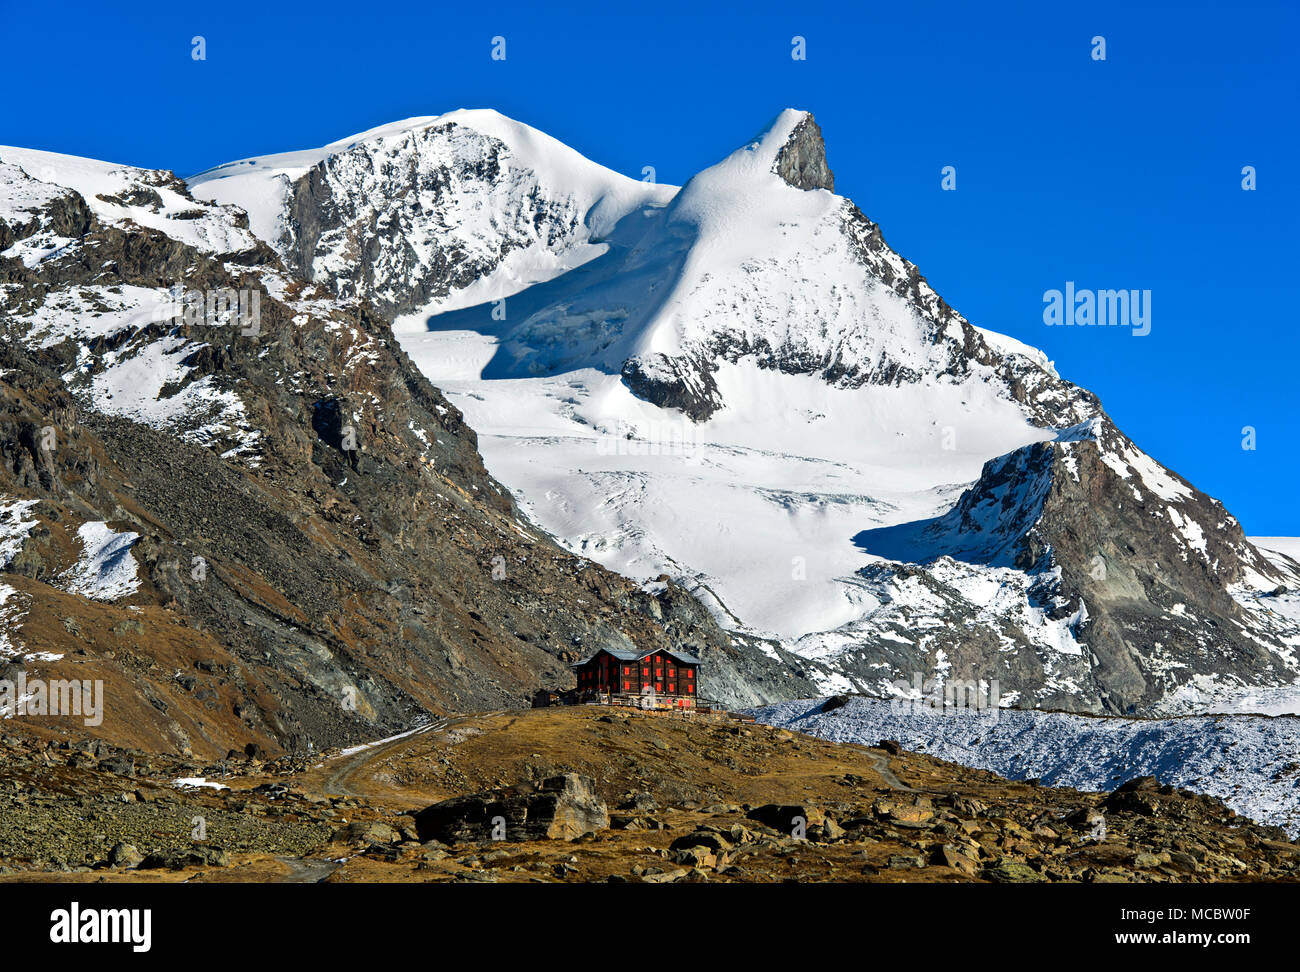 The historical Fluhalp mountain restaurant beneath the peaks Strahlhorn and Adlerhorn, Zermatt, Valais, Switzerland Stock Photo